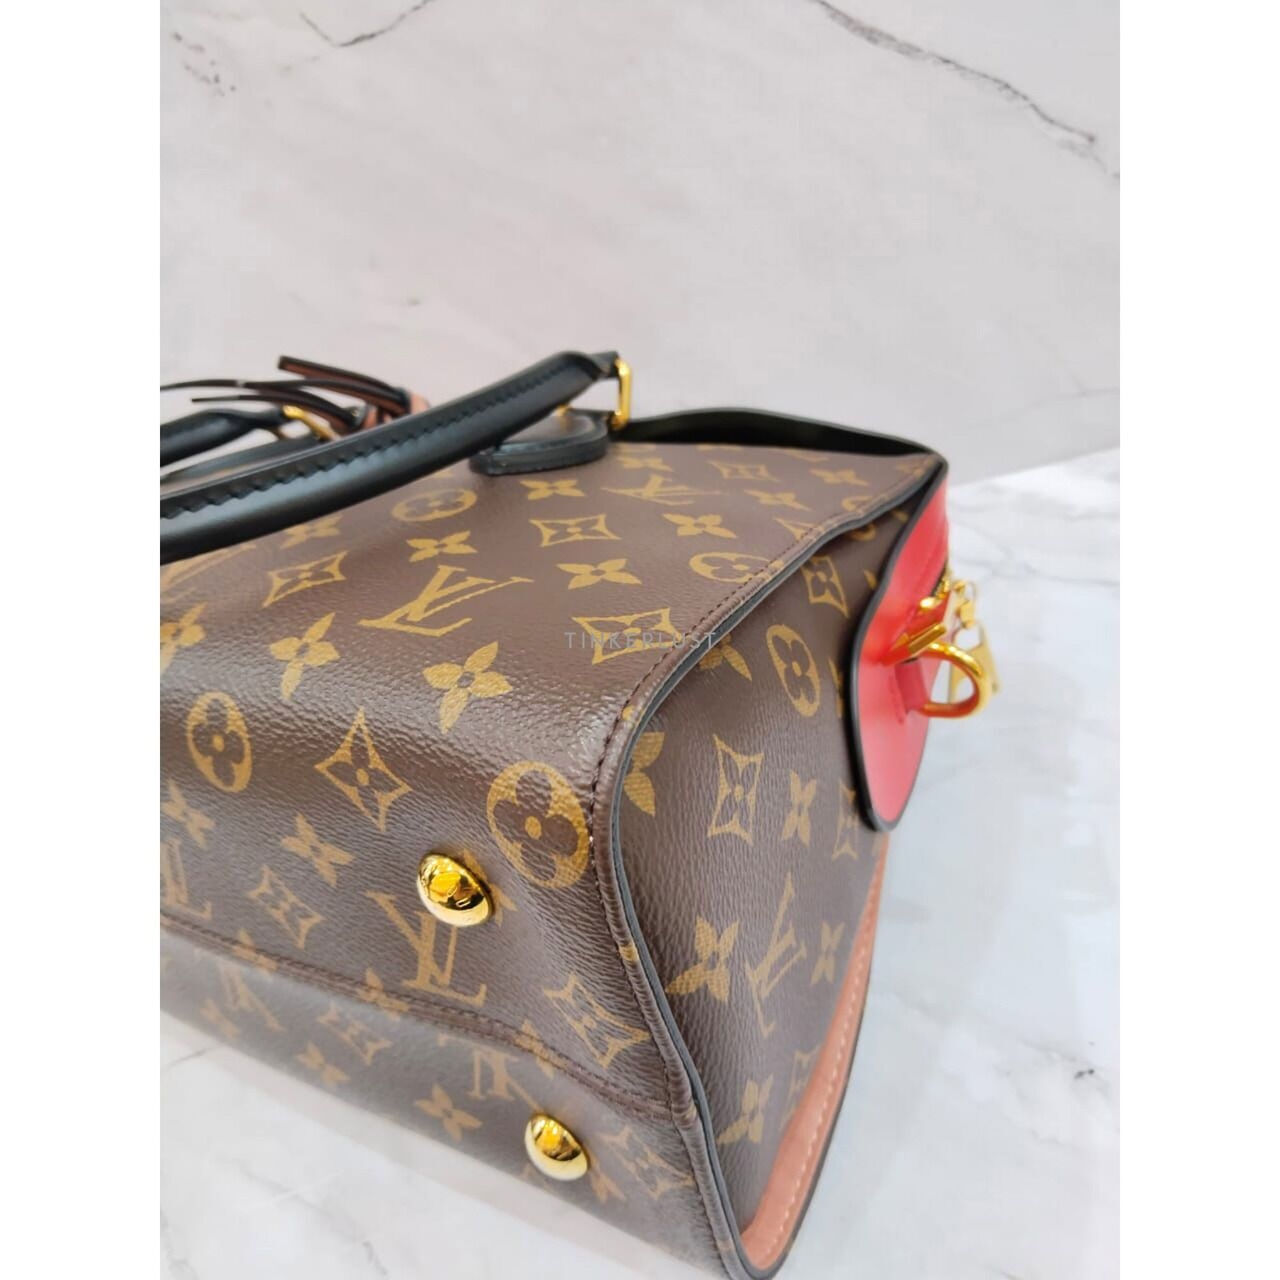 Louis Vuitton Tuileries Red Monogram Canvas 2018 Handbag